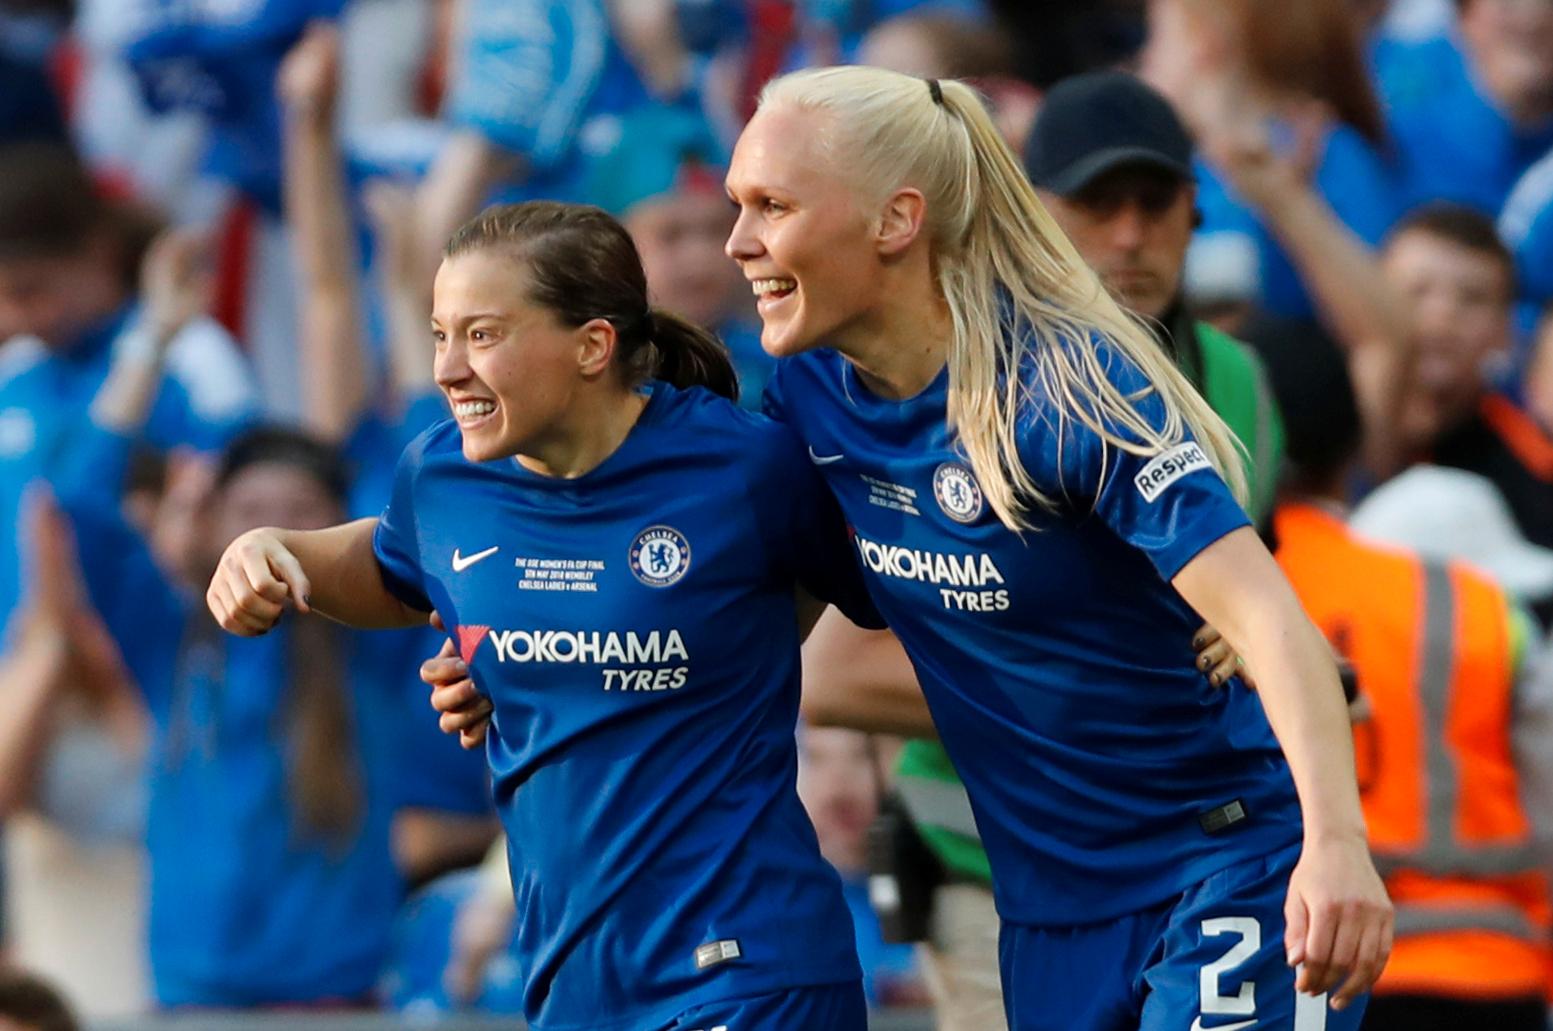  Maria Thorisdottir scoret da Chelsea vant stort i Sarajevo i mesterligaen onsdag 